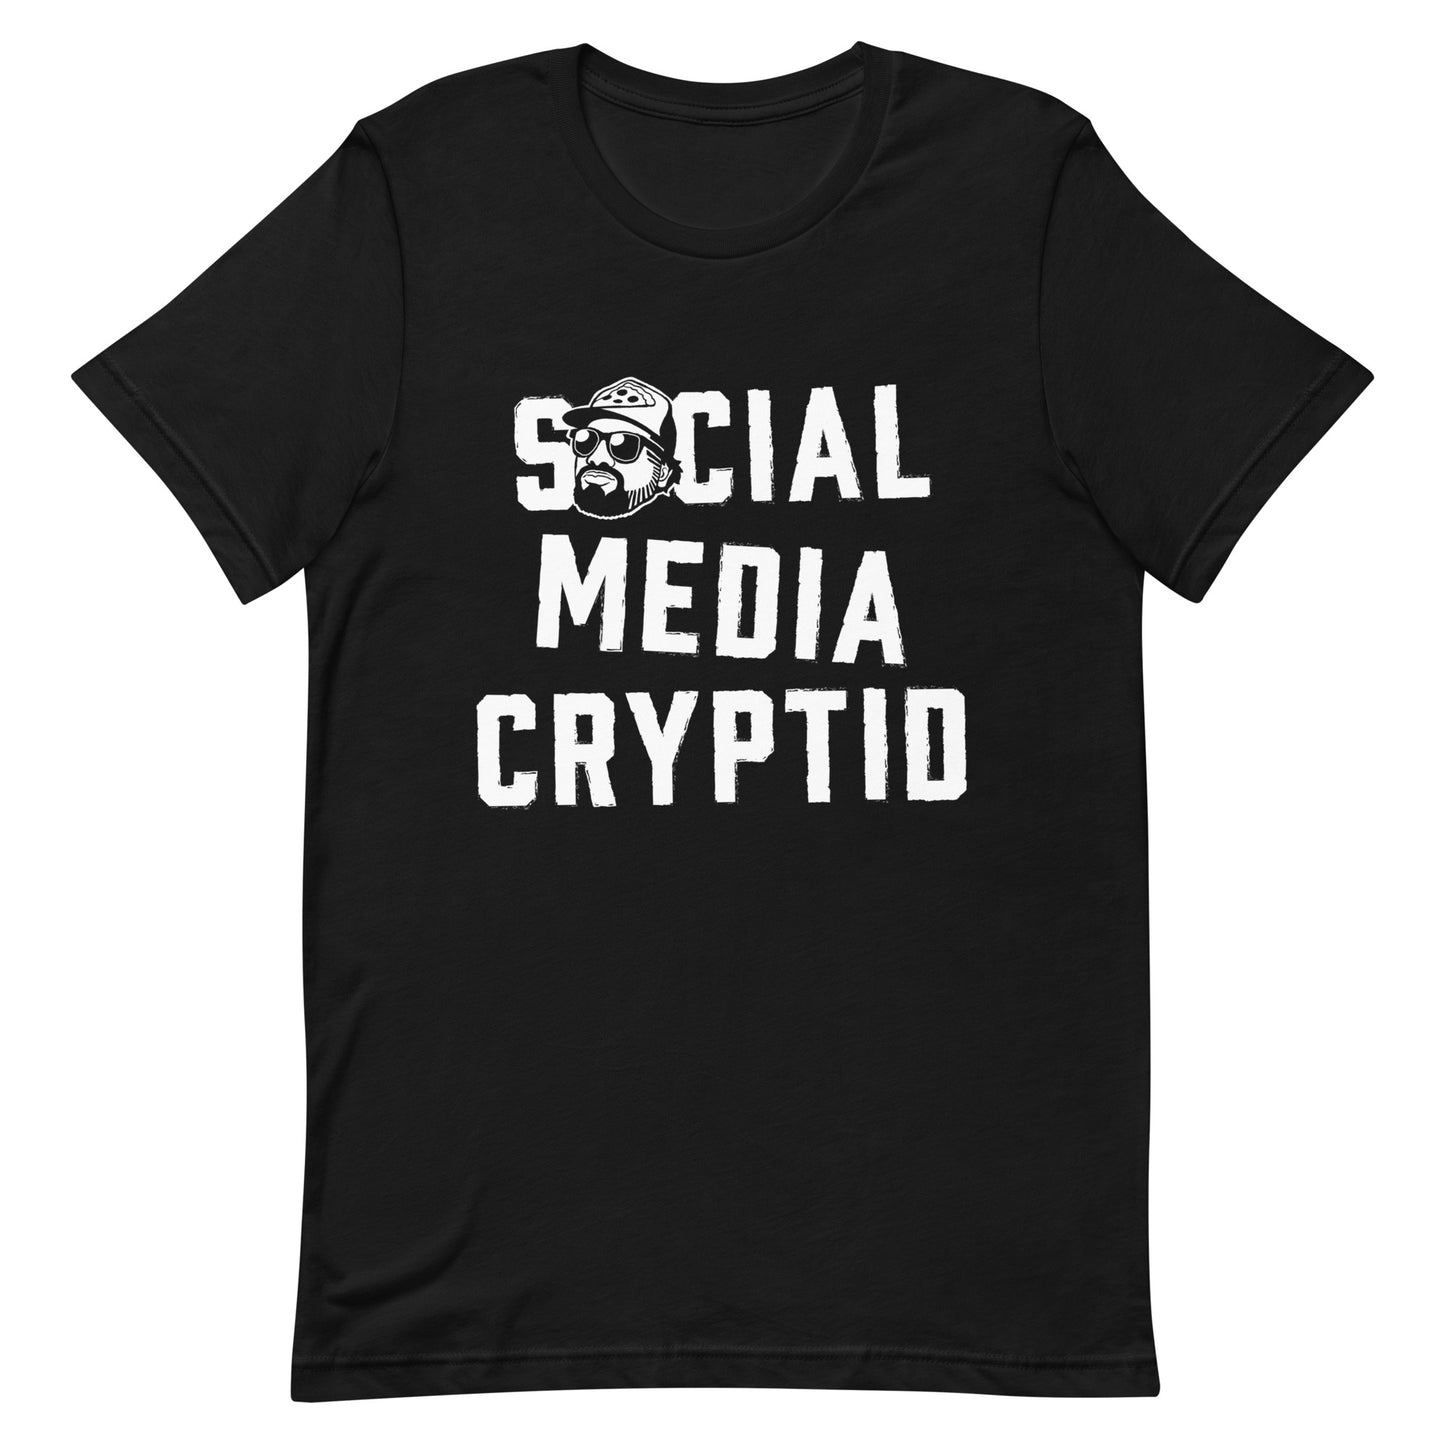 Social Media Crytpid - The Los! T-shirt